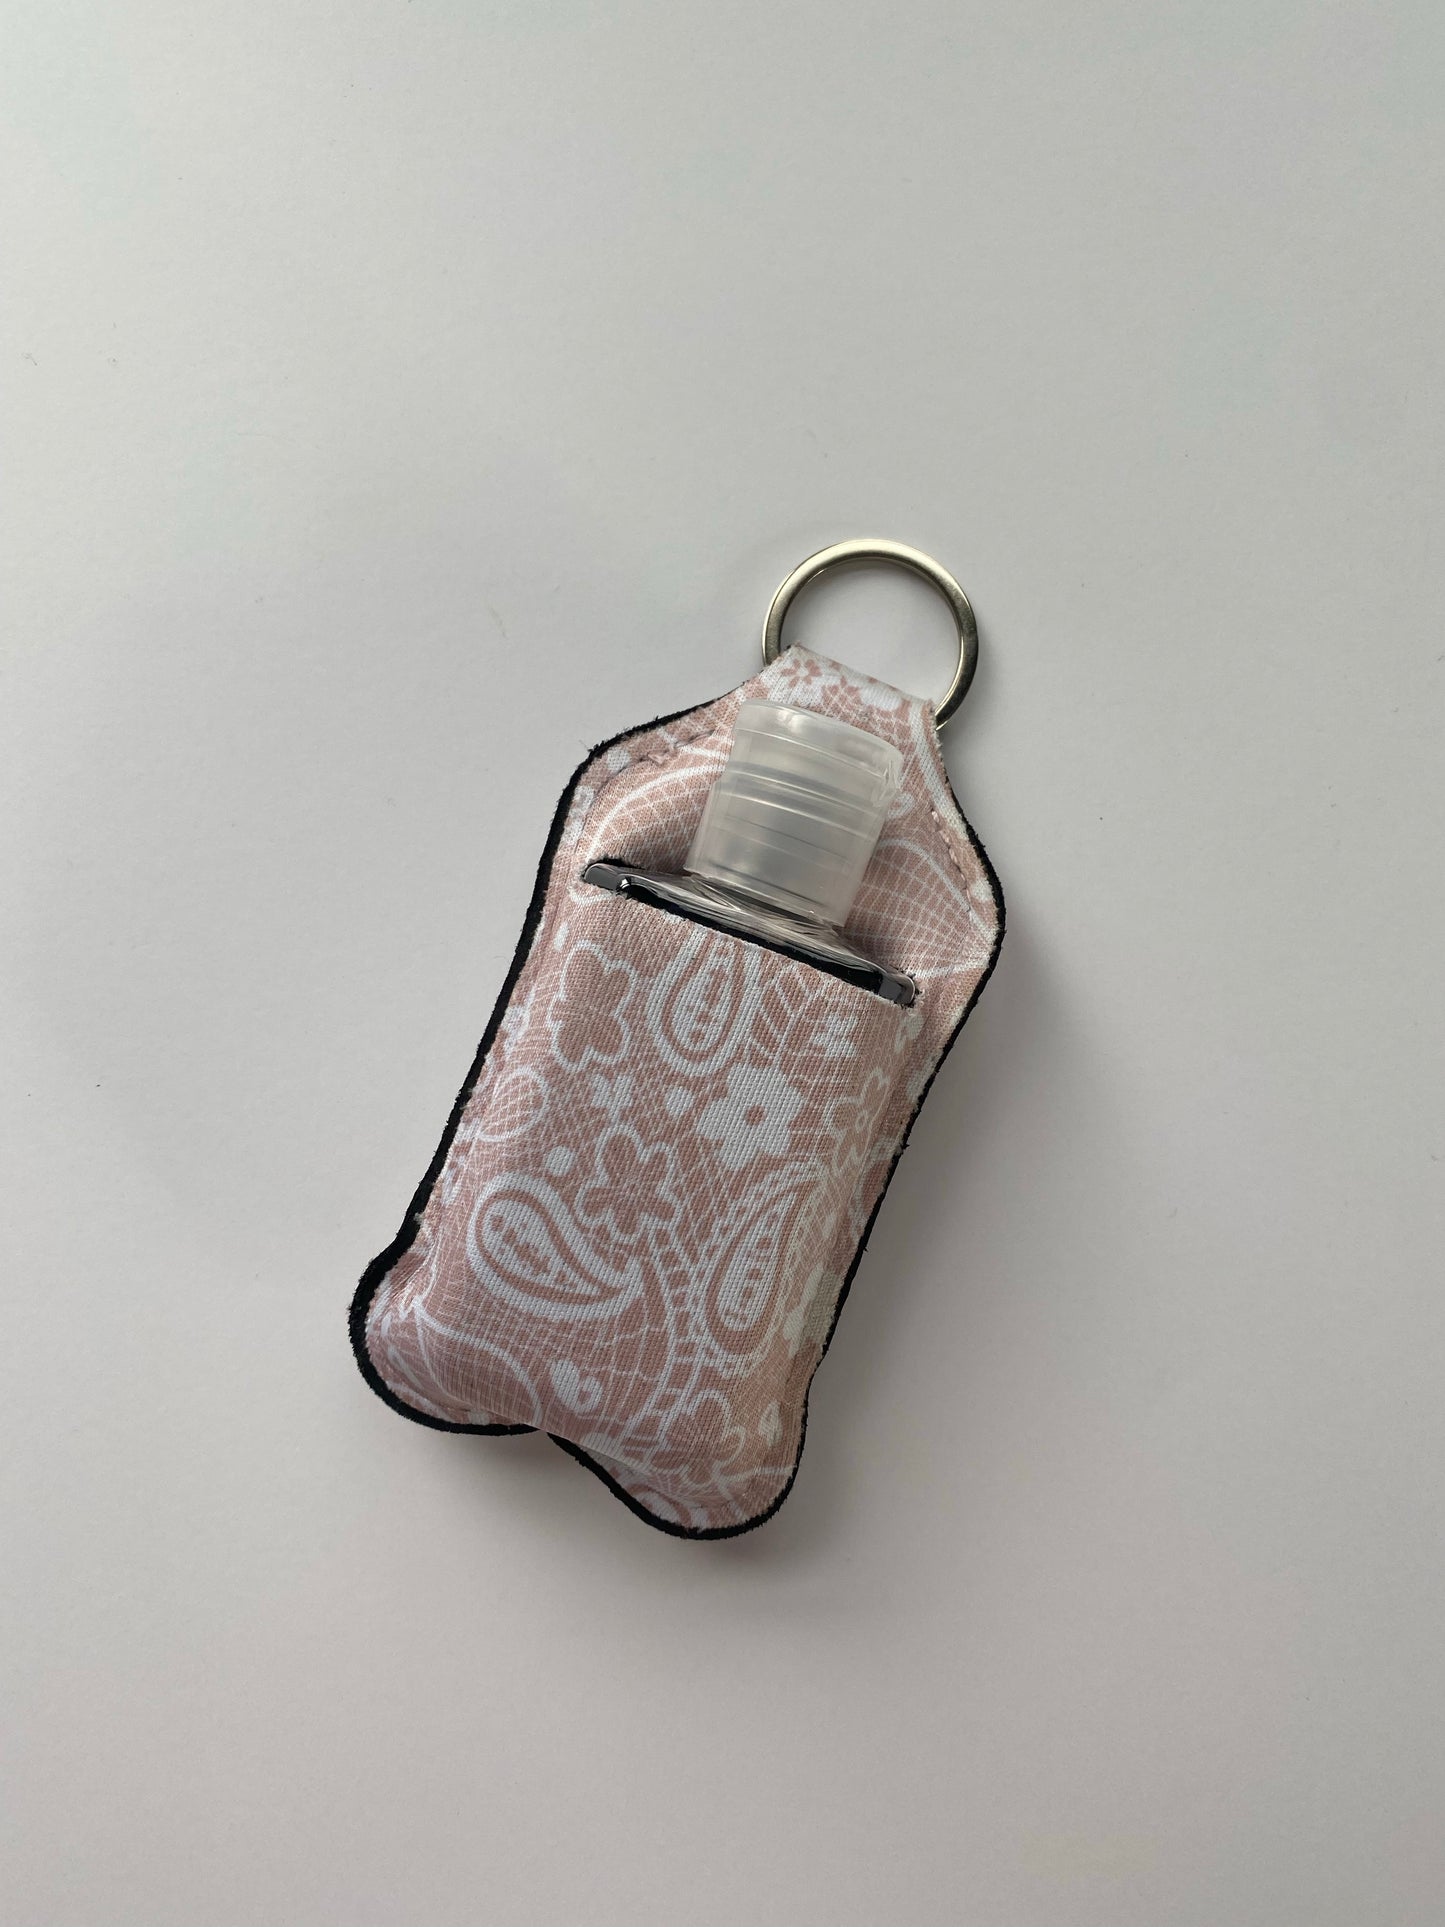 Lace Hand Sanitizer Keychain